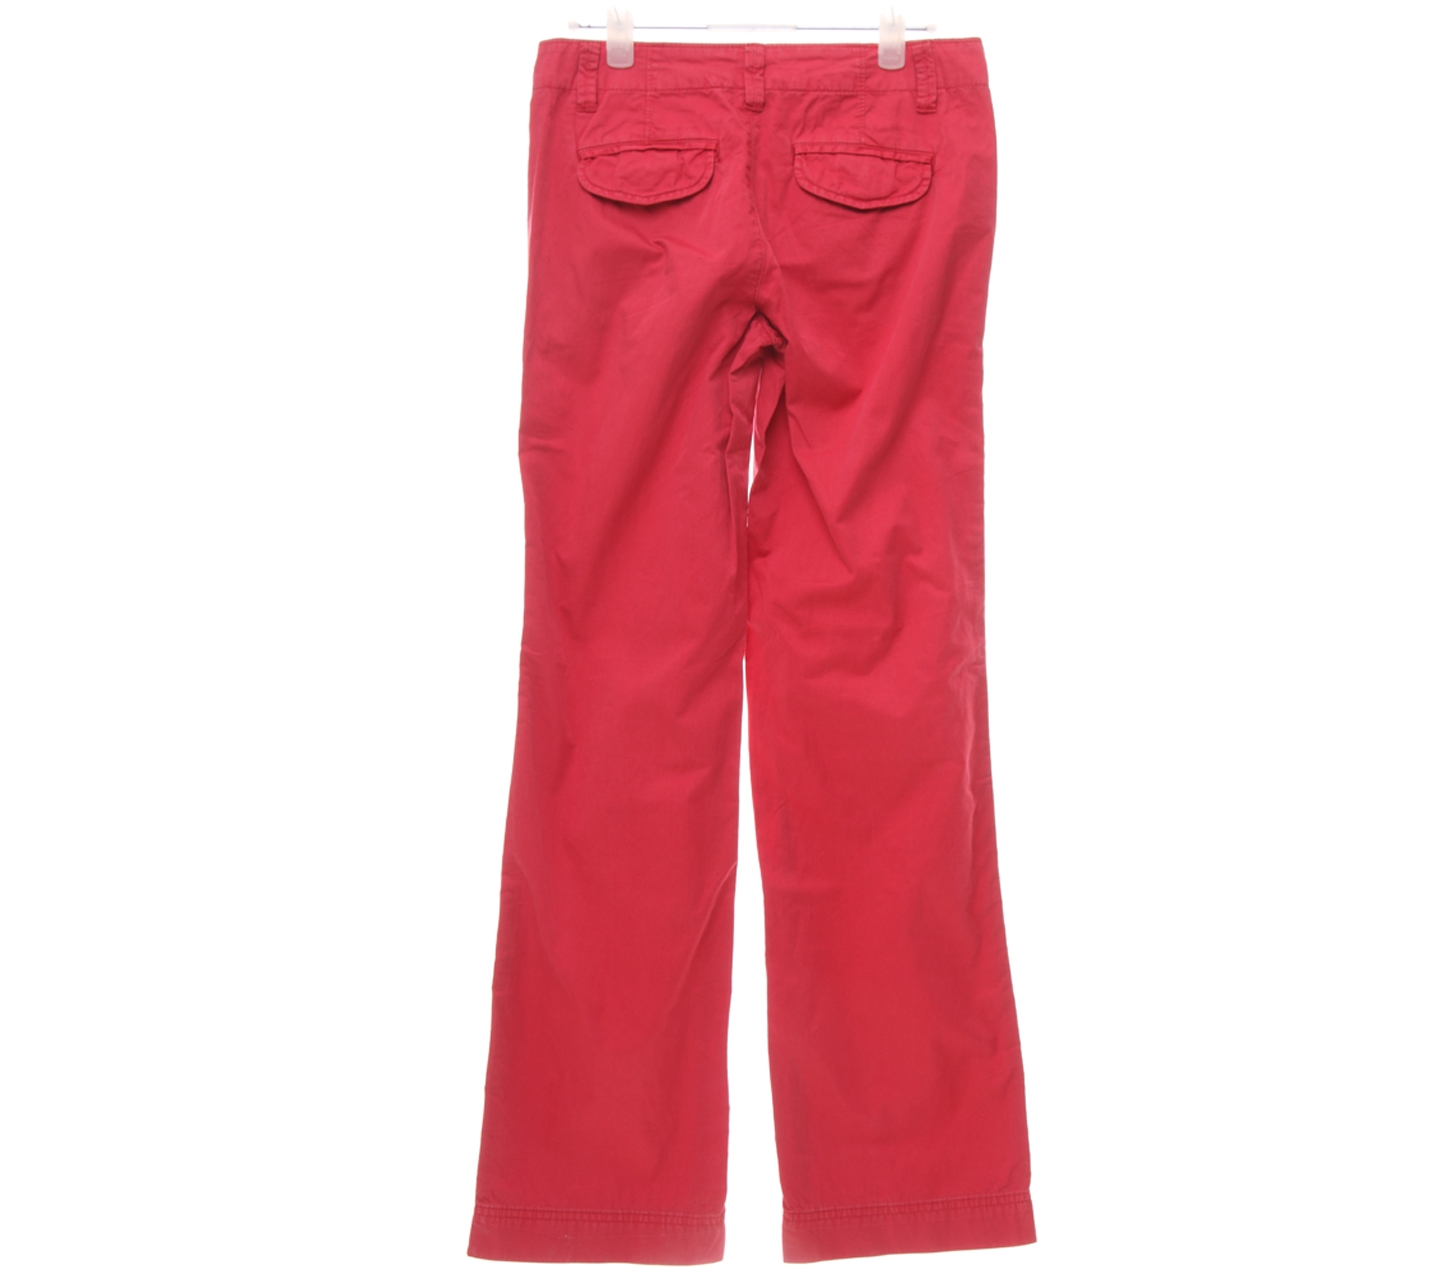 Gap Red Long Pants